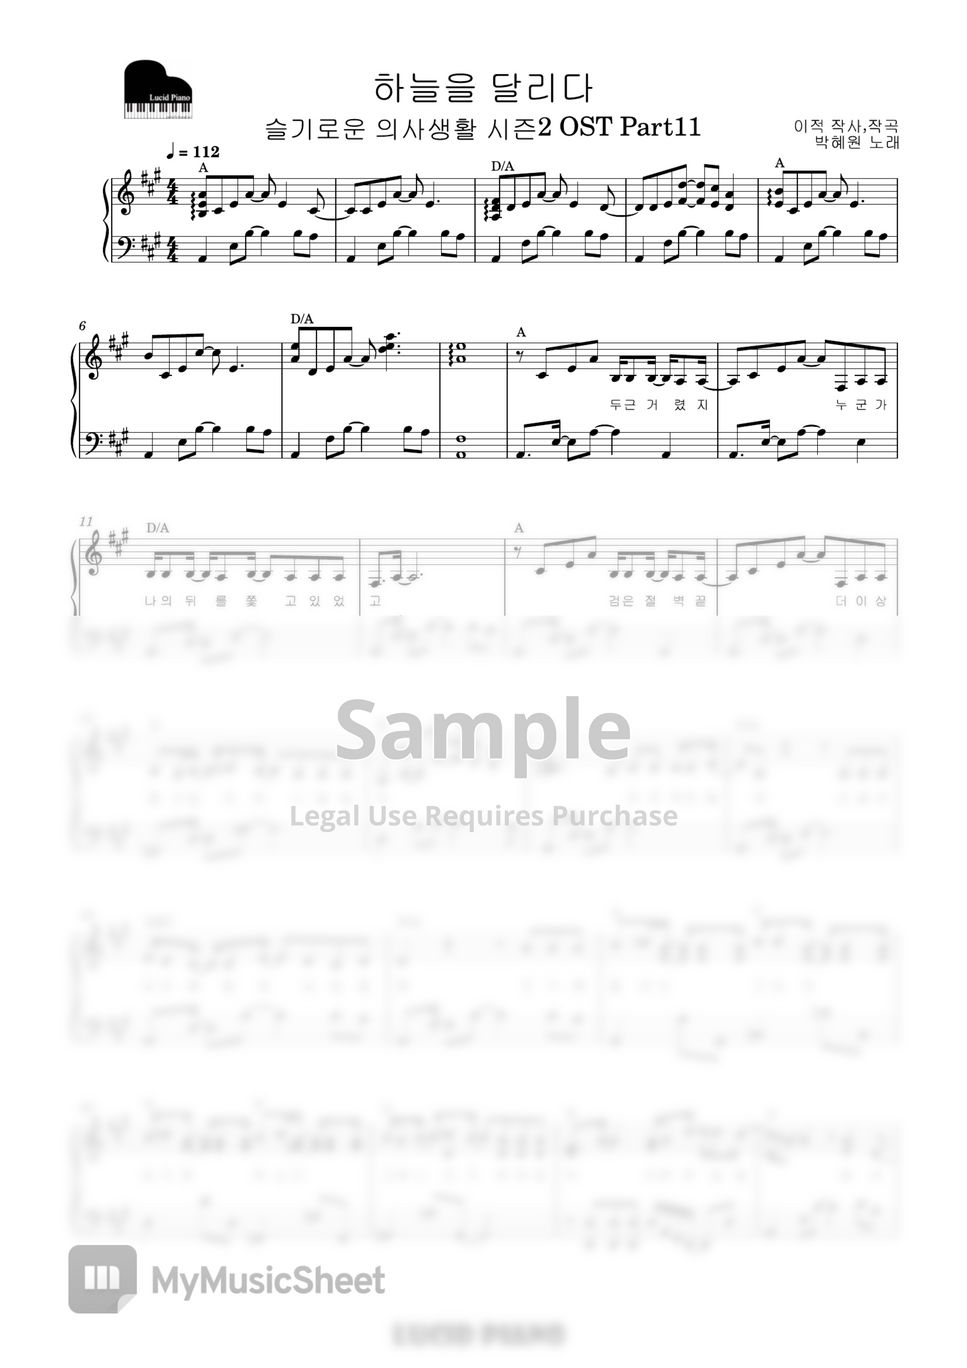 HYNN(박혜원) - Running in the sky(하늘을 달리다) (Piano sheet) by Lucid Piano